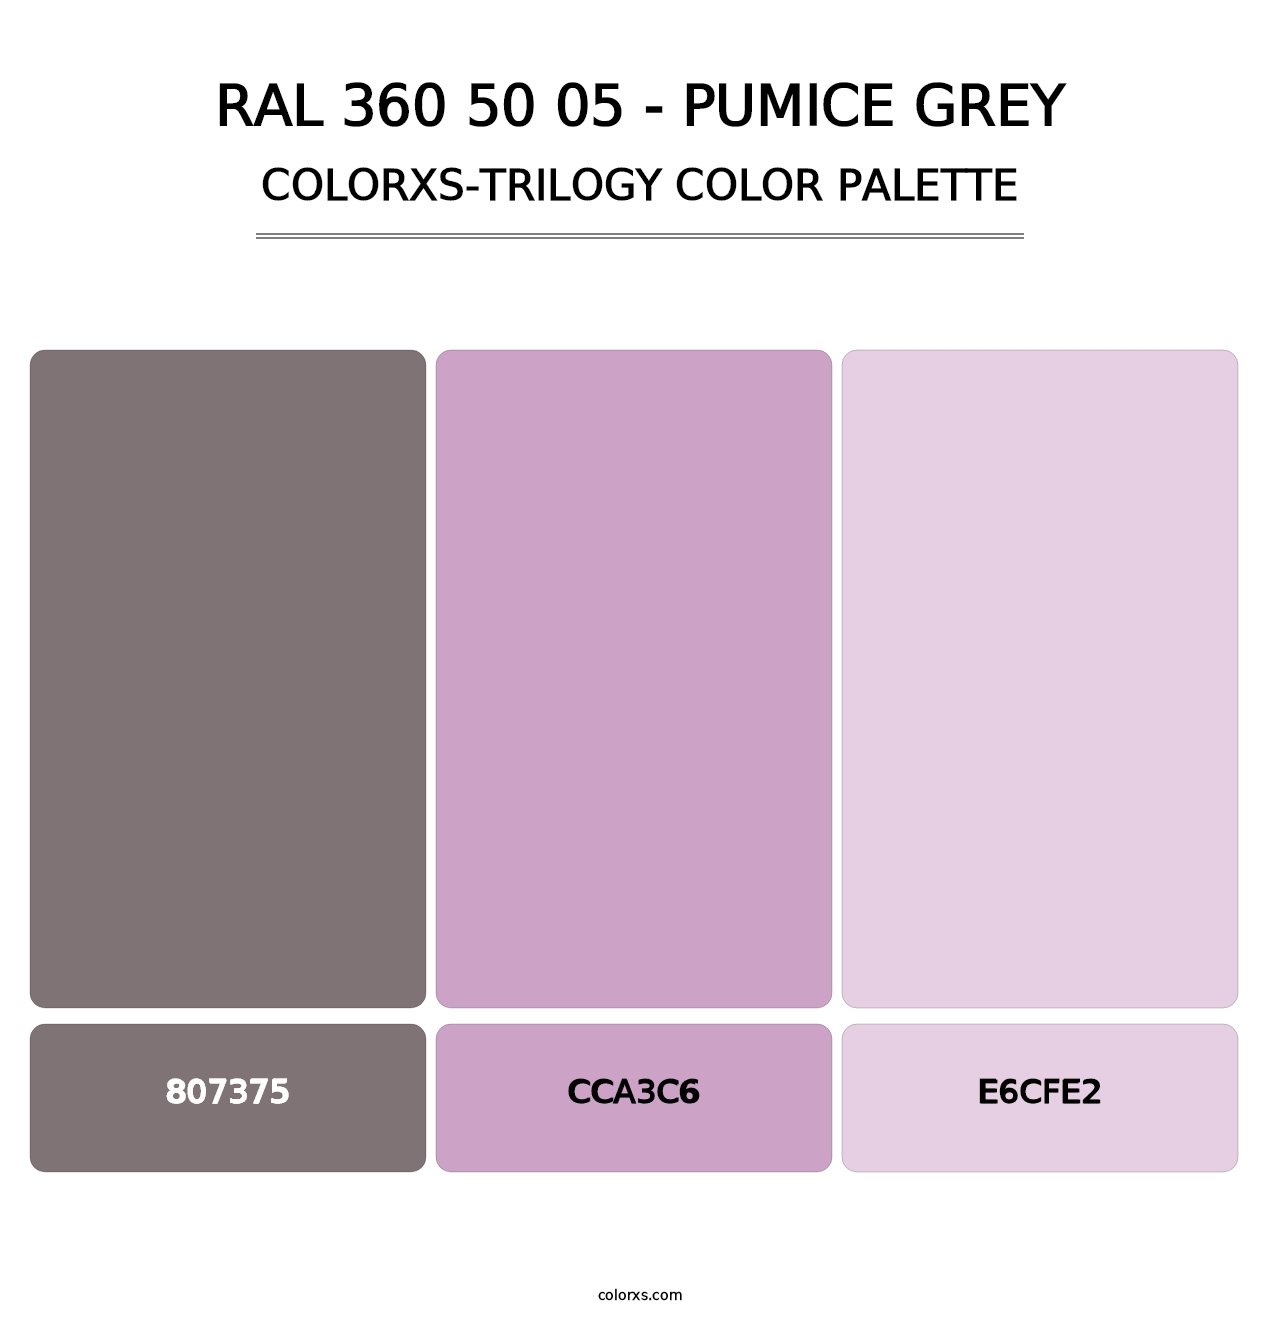 RAL 360 50 05 - Pumice Grey - Colorxs Trilogy Palette